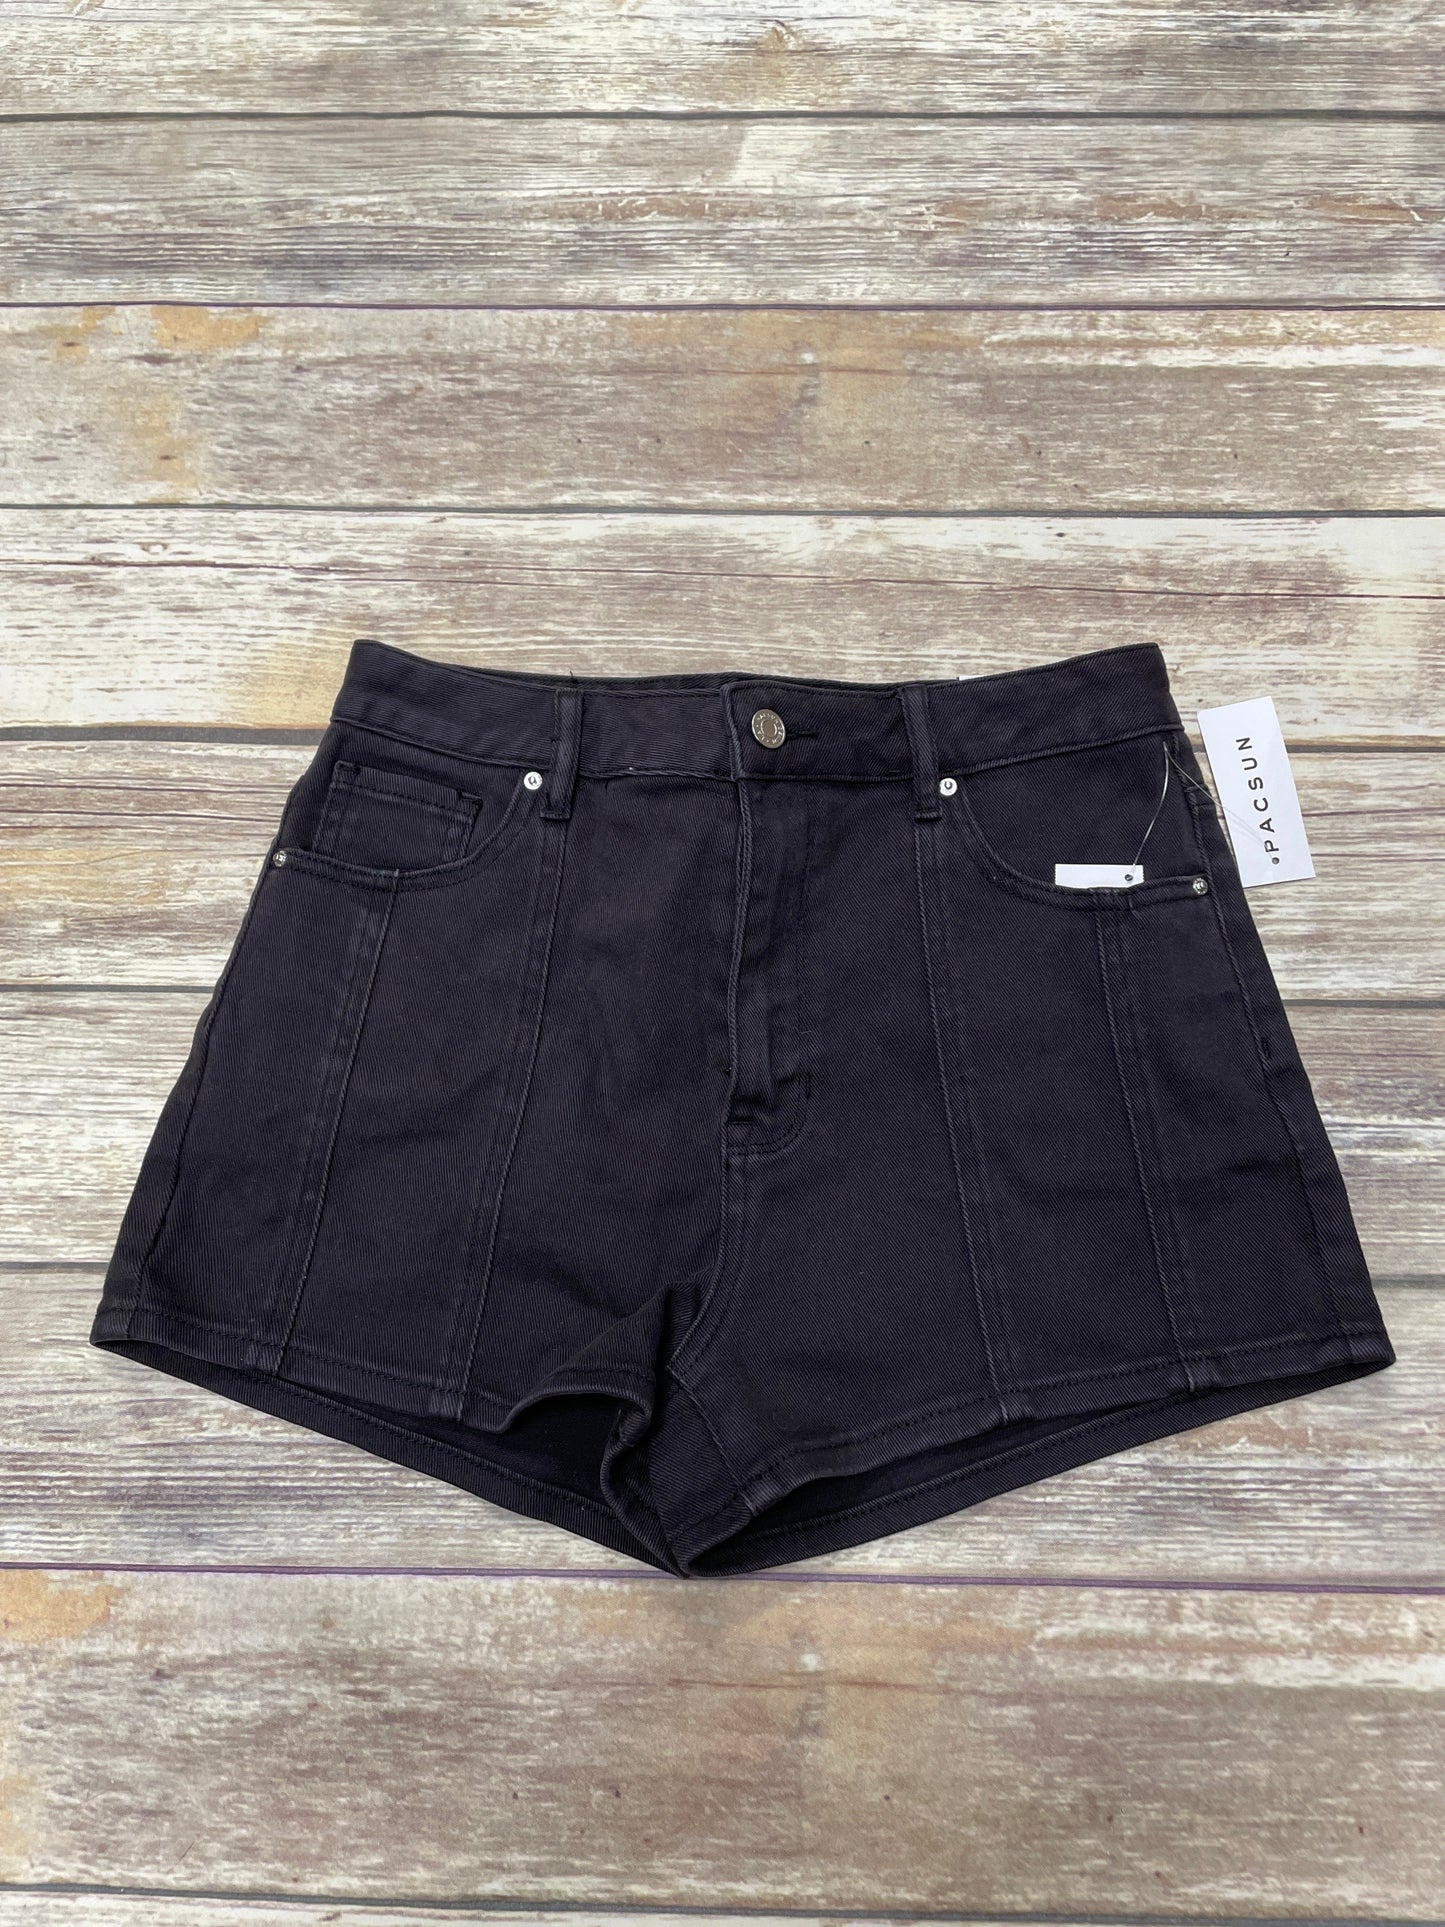 Black Denim Shorts Pacsun, Size 4